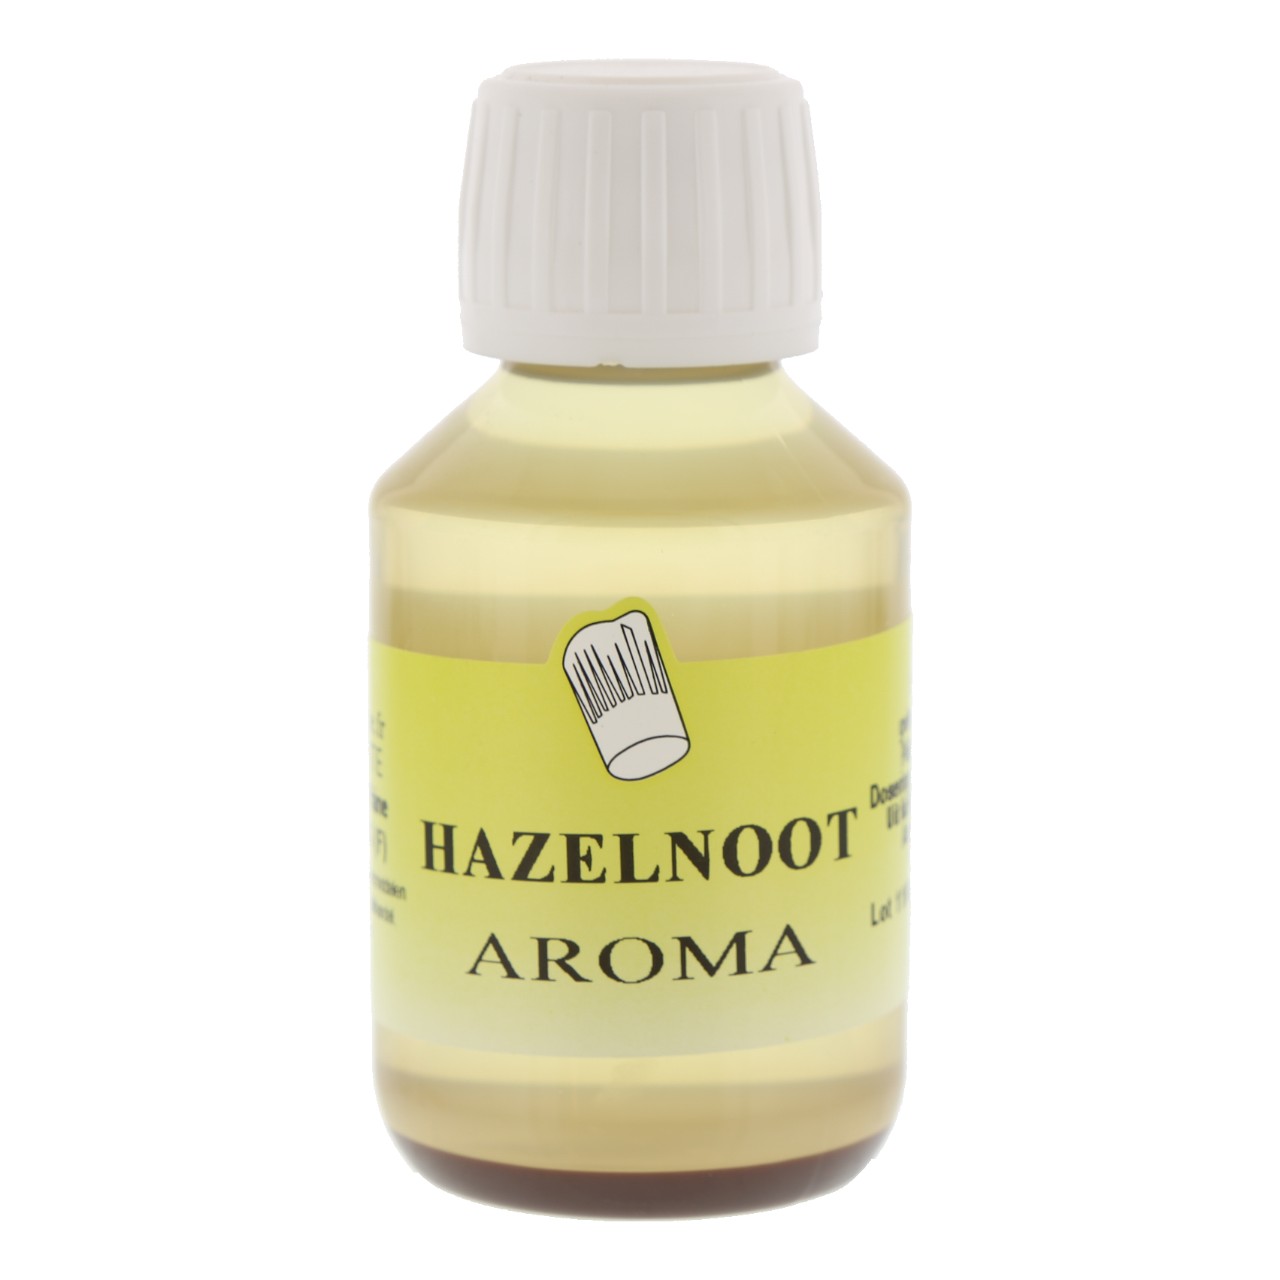 Hazelnoot aroma